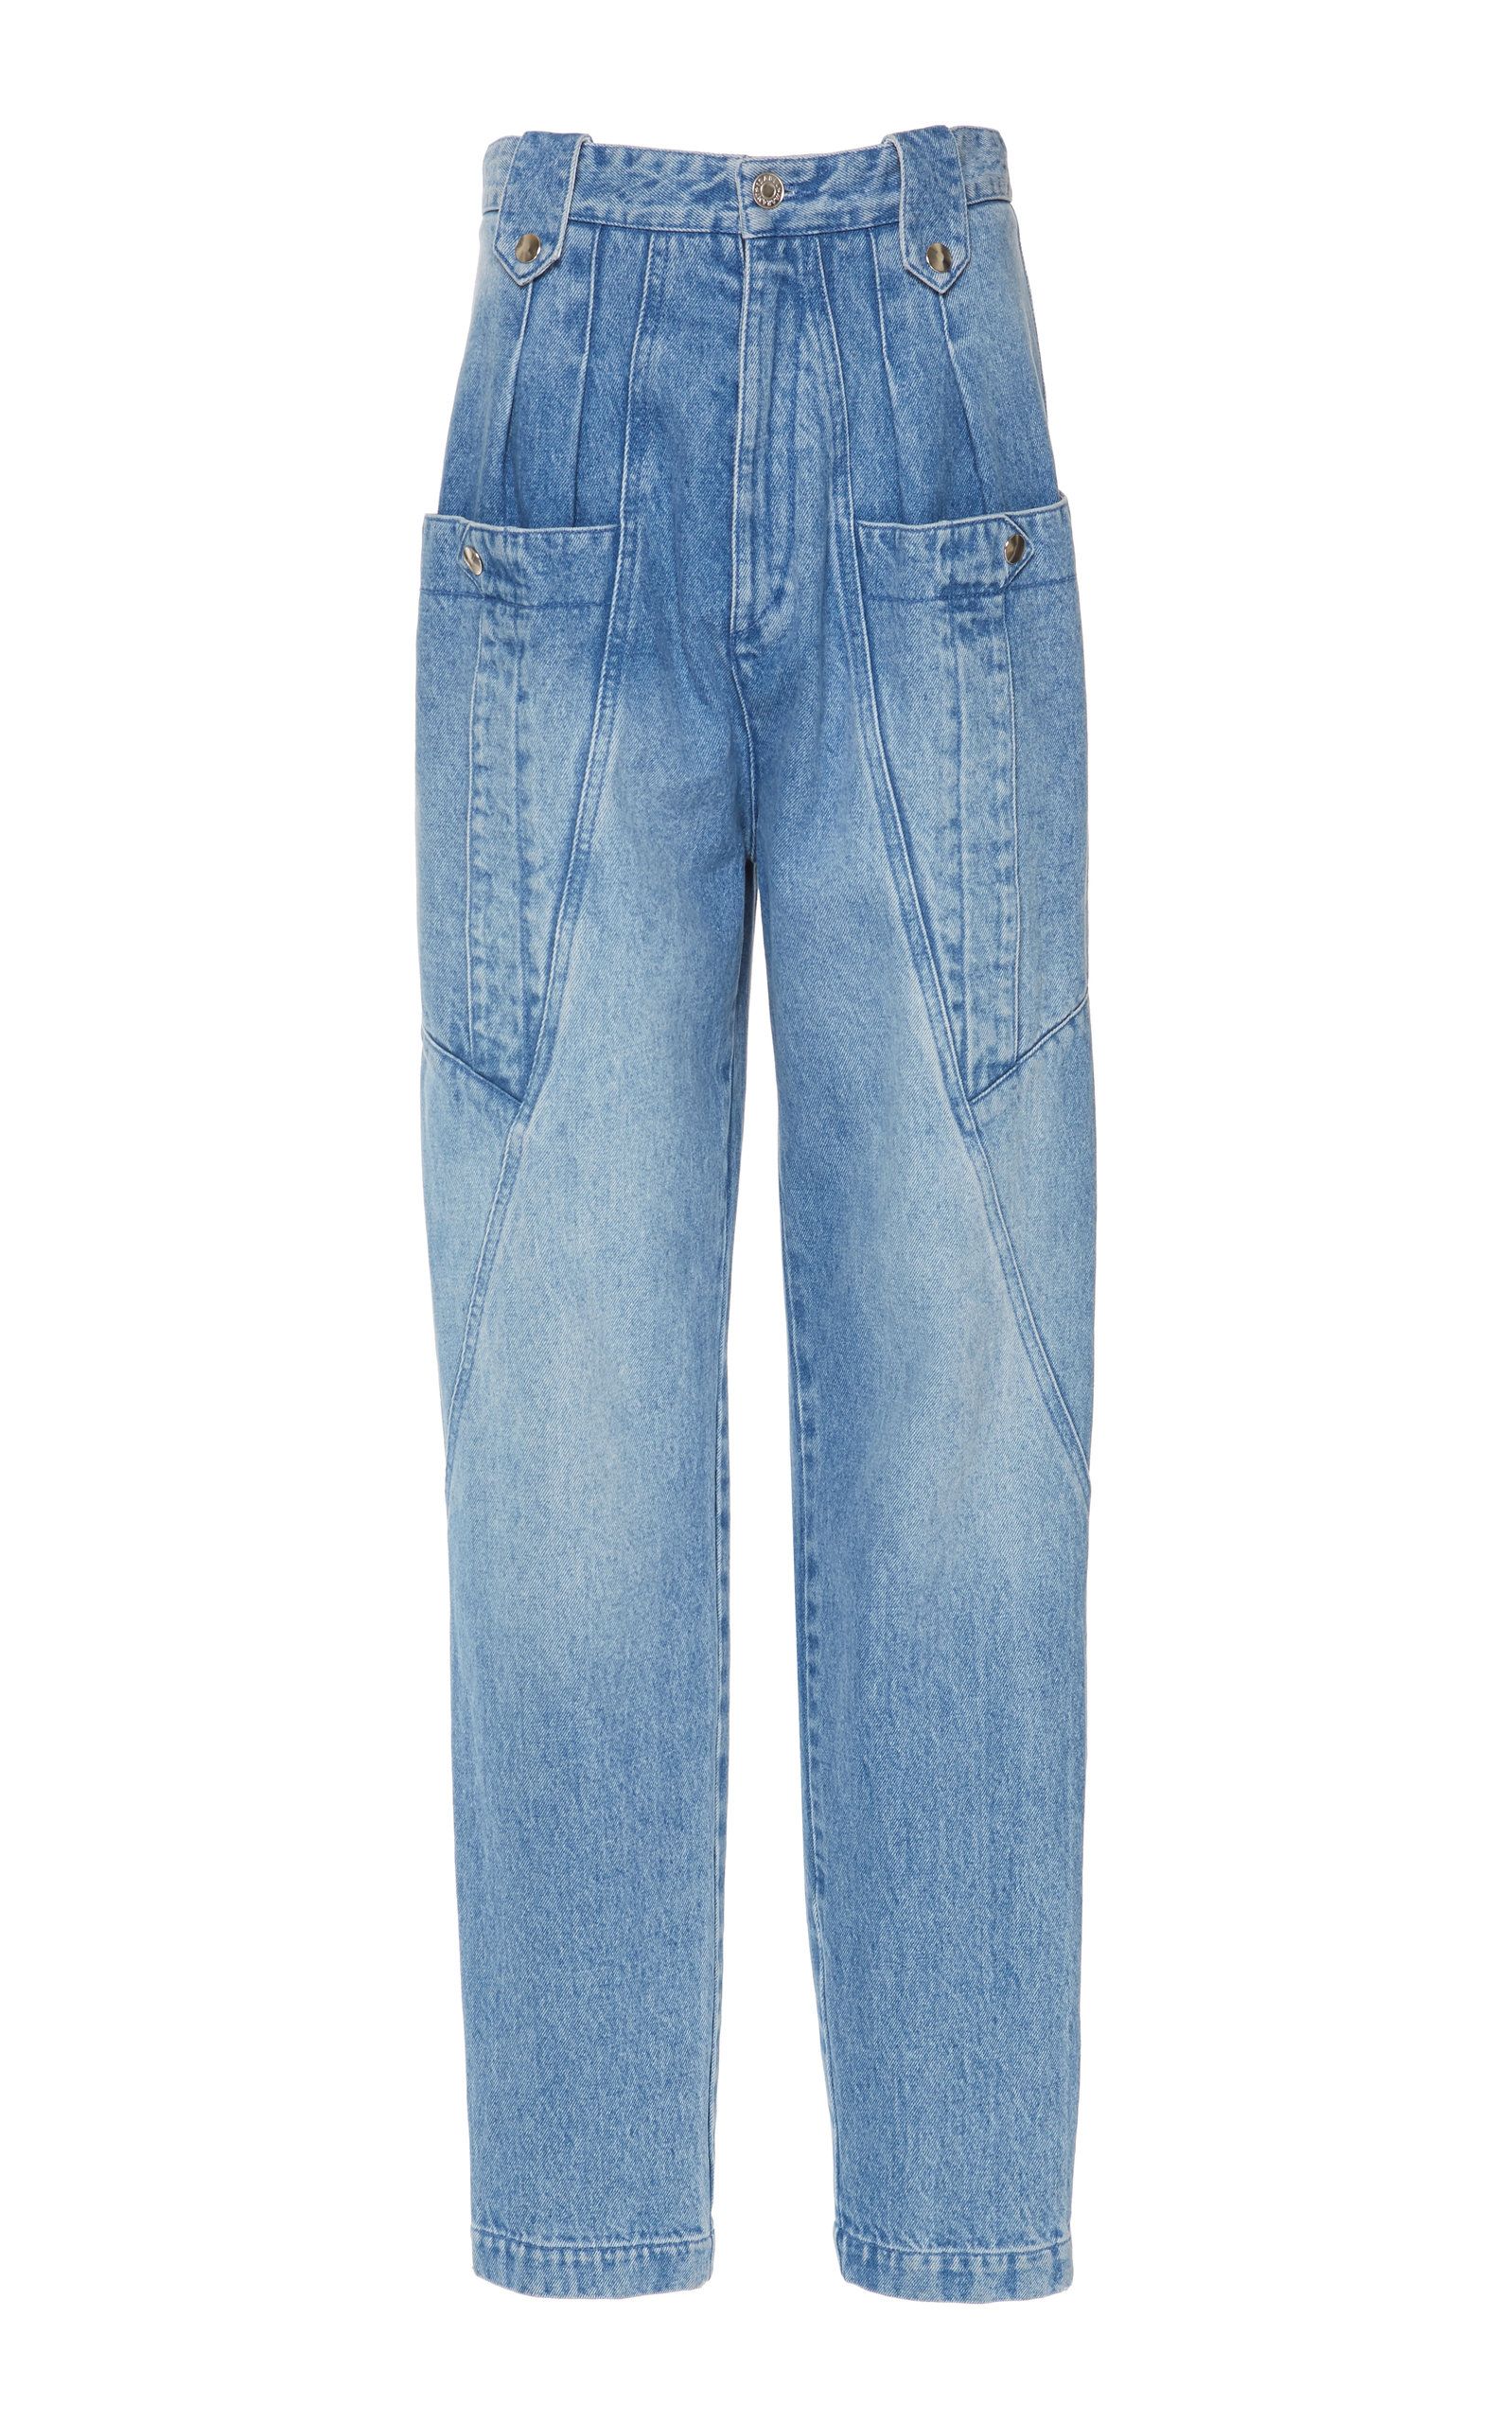 https://hips.hearstapps.com/vader-prod.s3.amazonaws.com/1590599241-large_isabel-marant-light-wash-kerris-high-rise-tapered-jeans.jpg